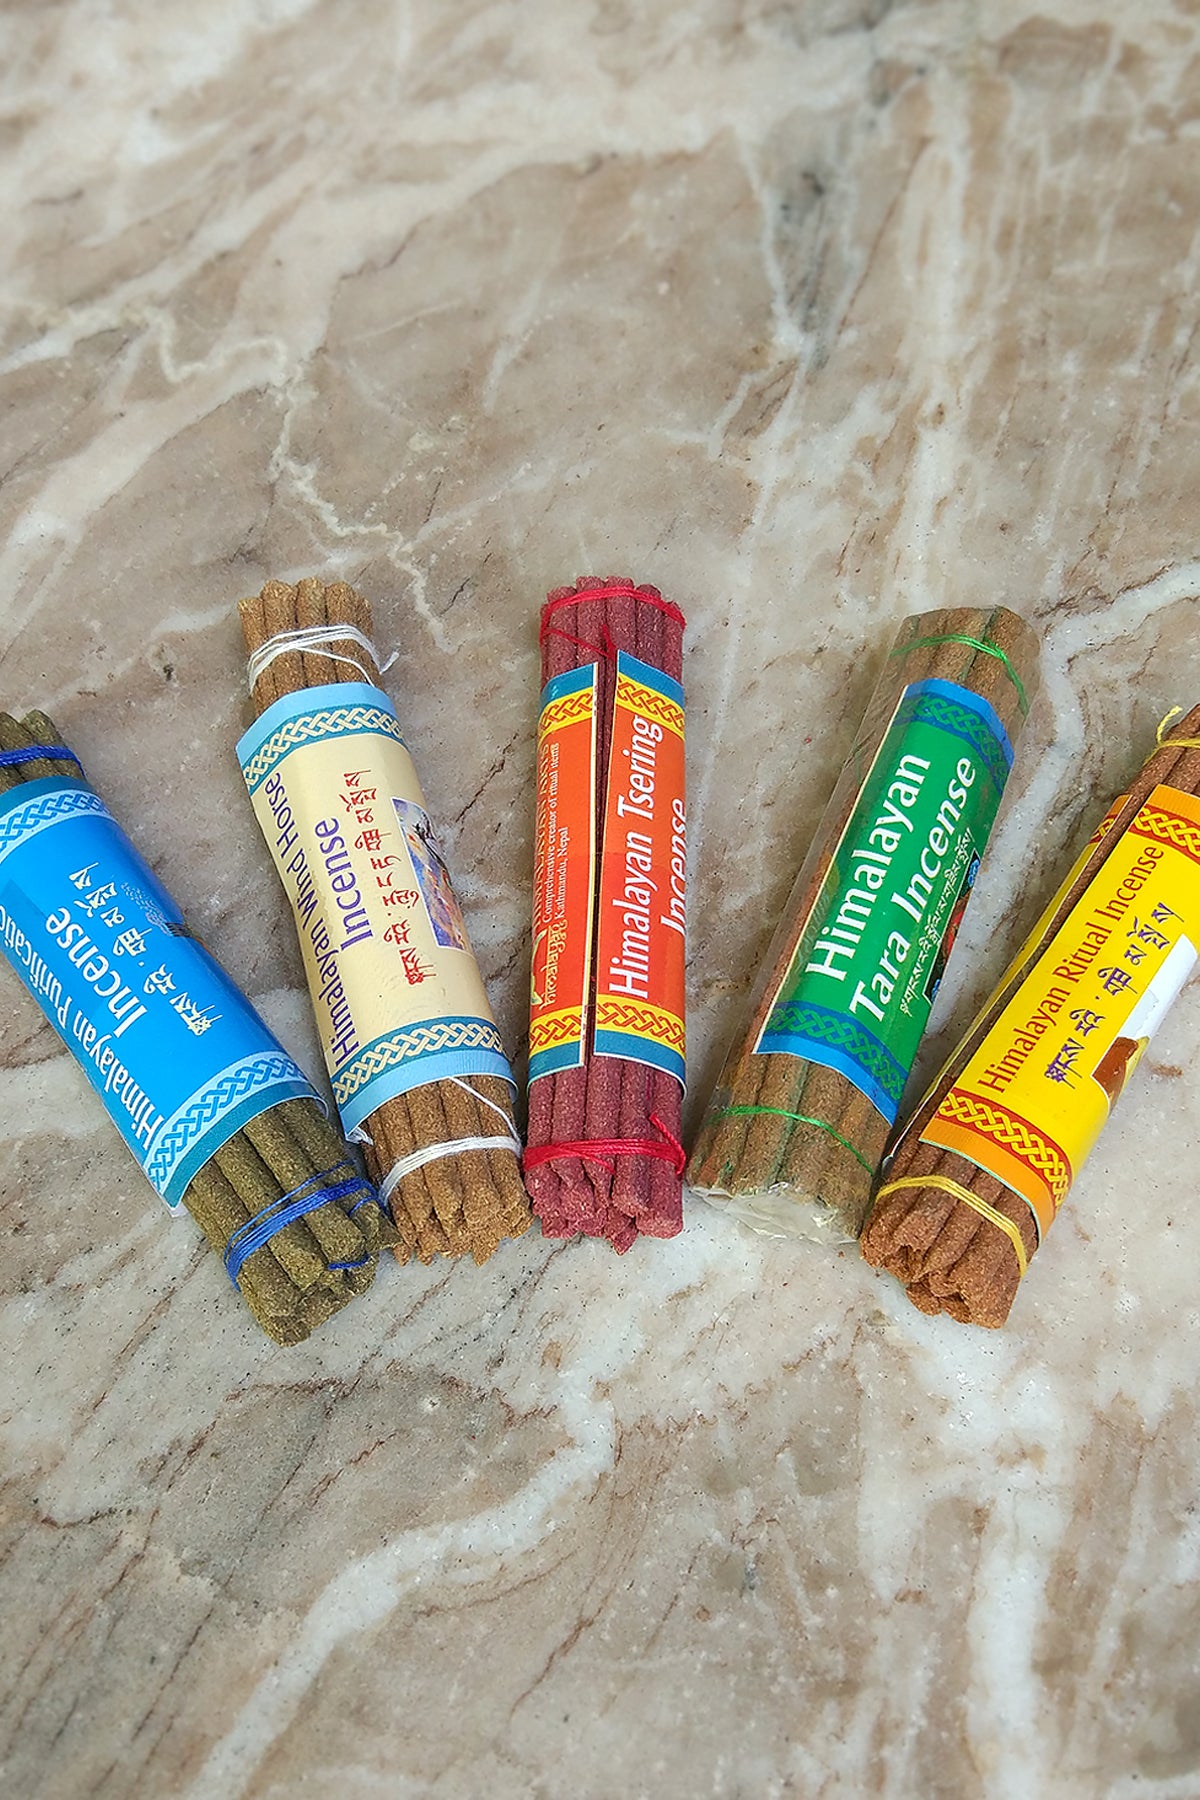 Set of 5 Himalayan Incense Sticks, handmade in Nepal